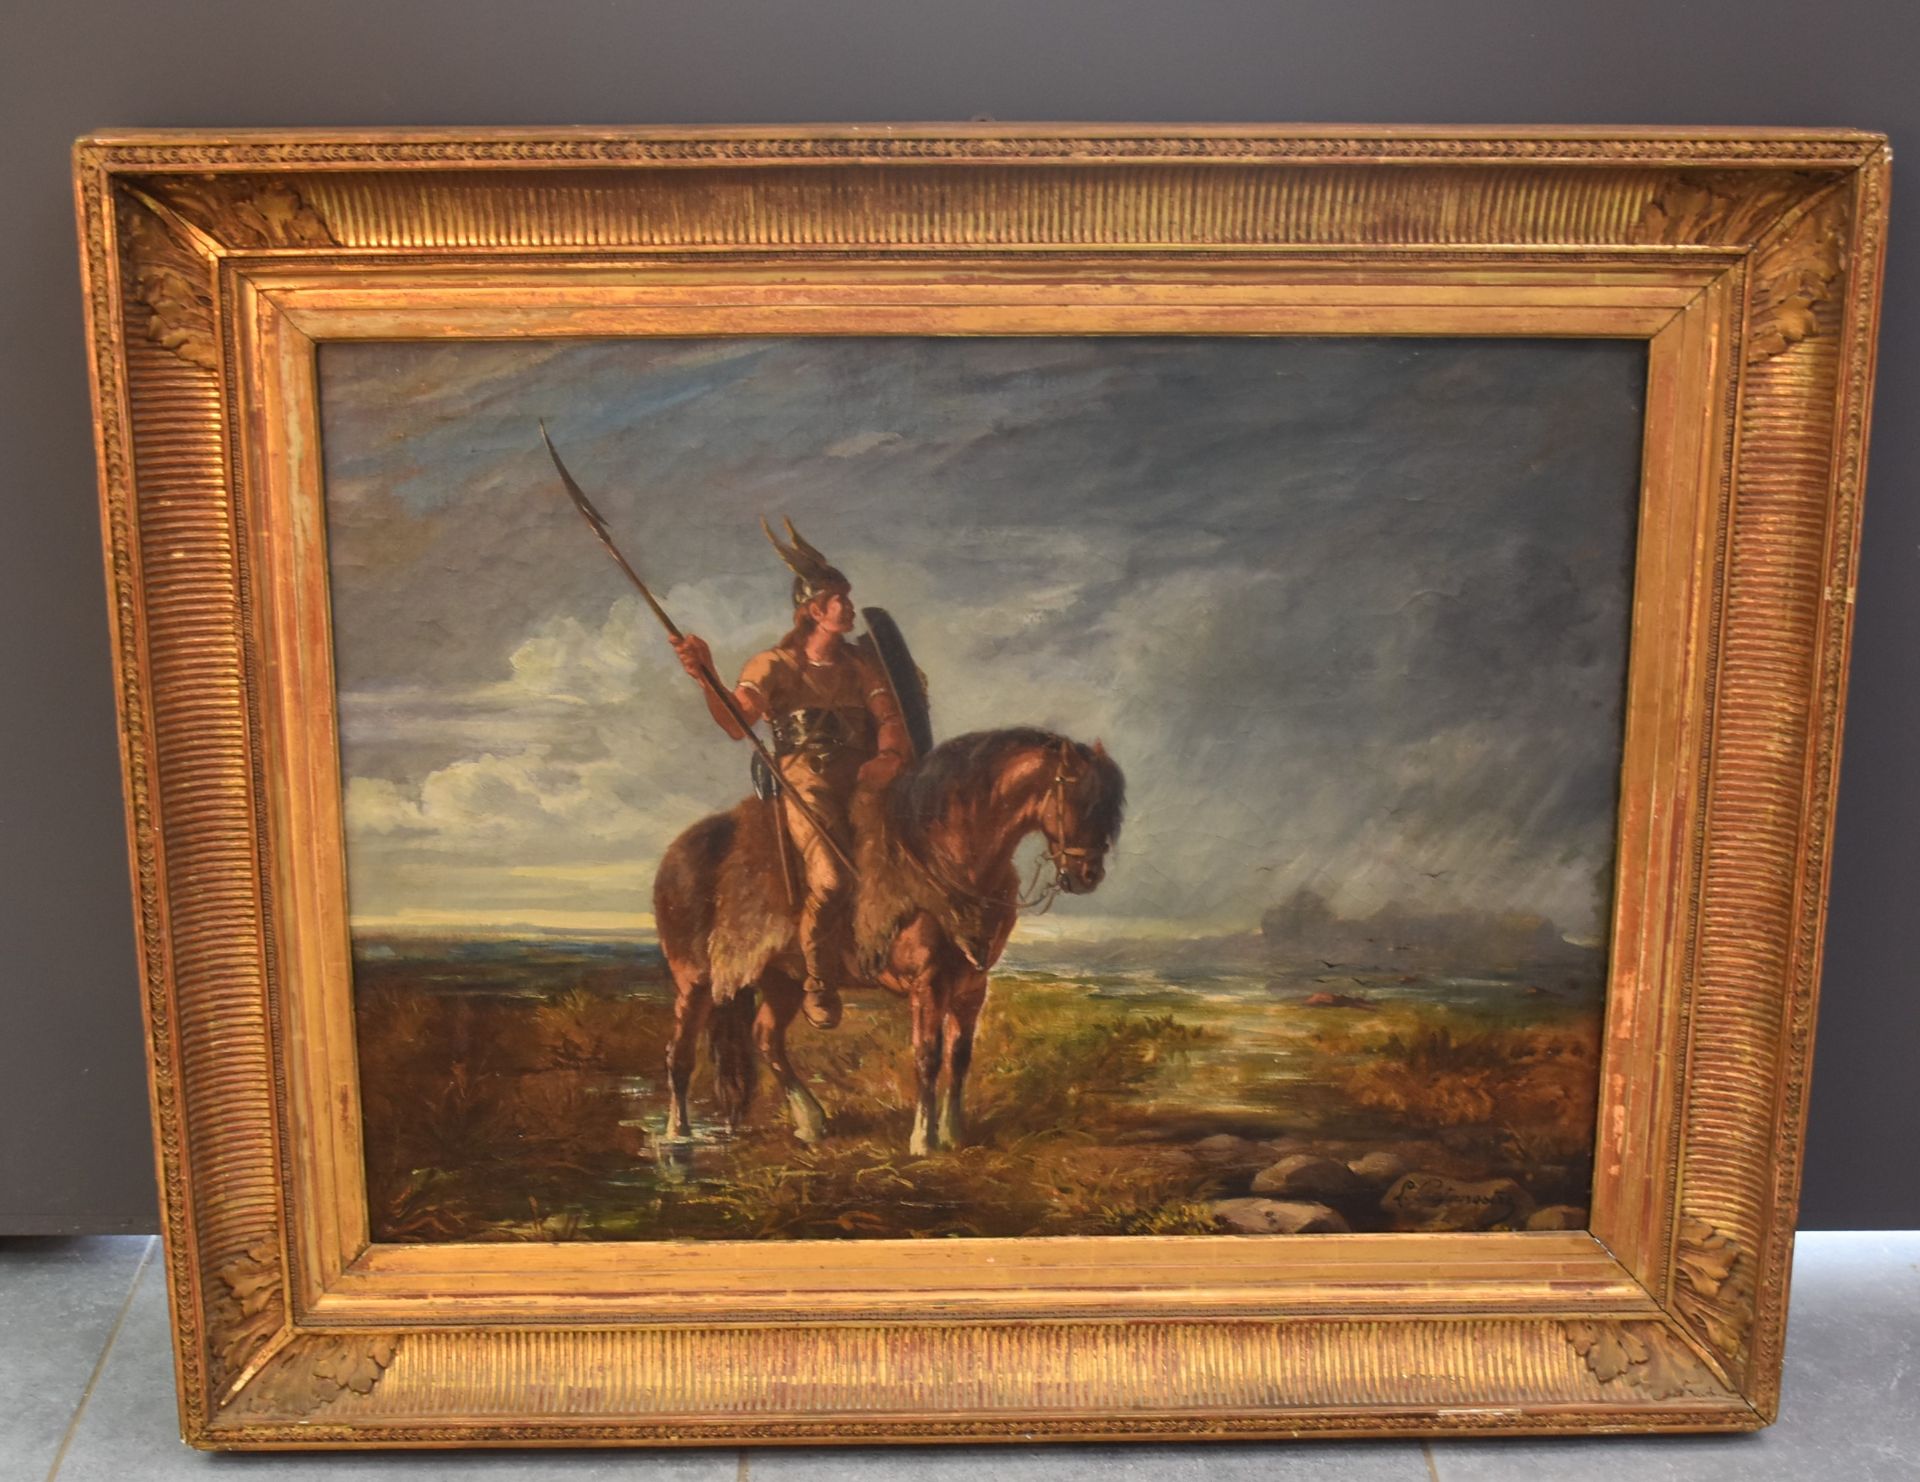 Louis PATERNOSTRE (1824-1879); The Gallic lancer. Oil on canvas. Dimensions : 63 x 86 cm. Old